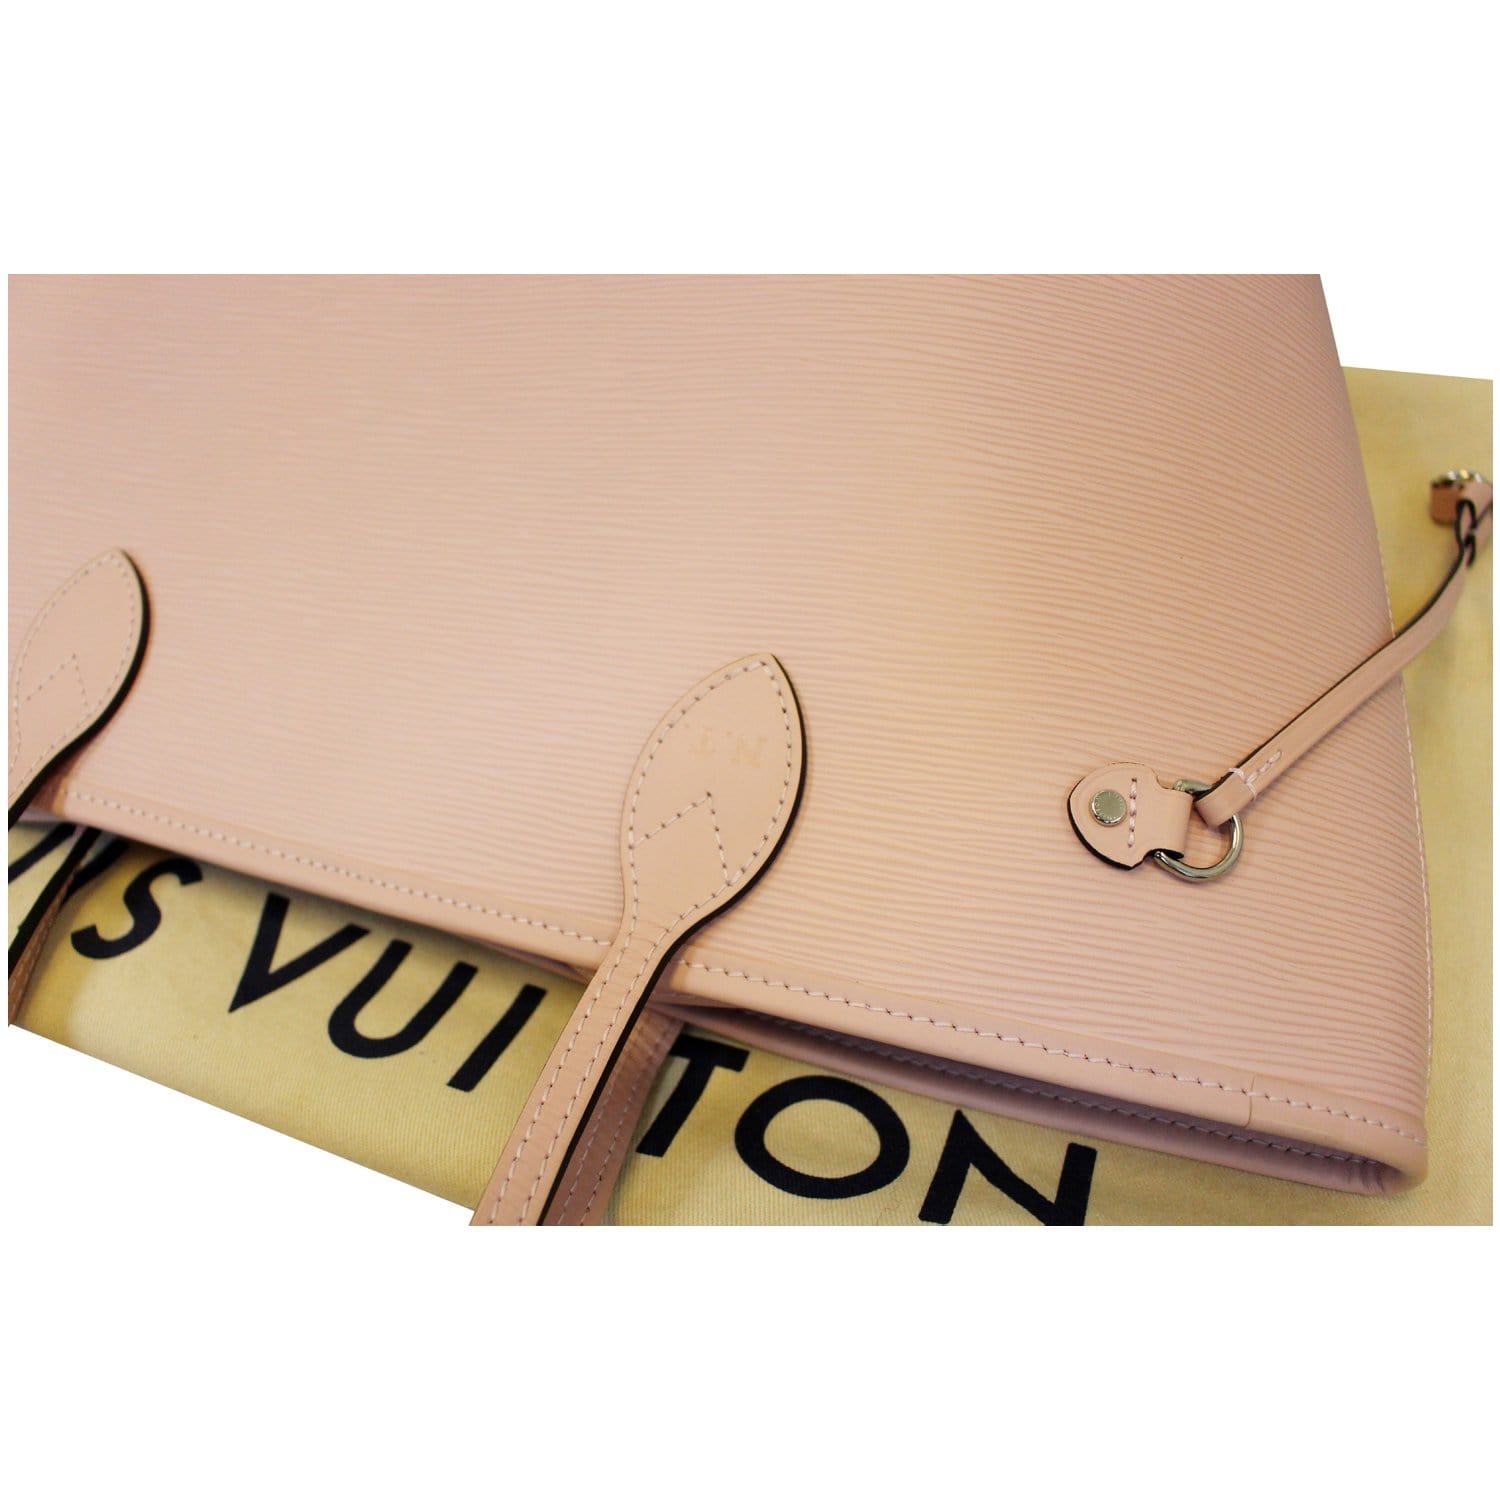 Louis Vuitton Epi Neverfull MM Pink